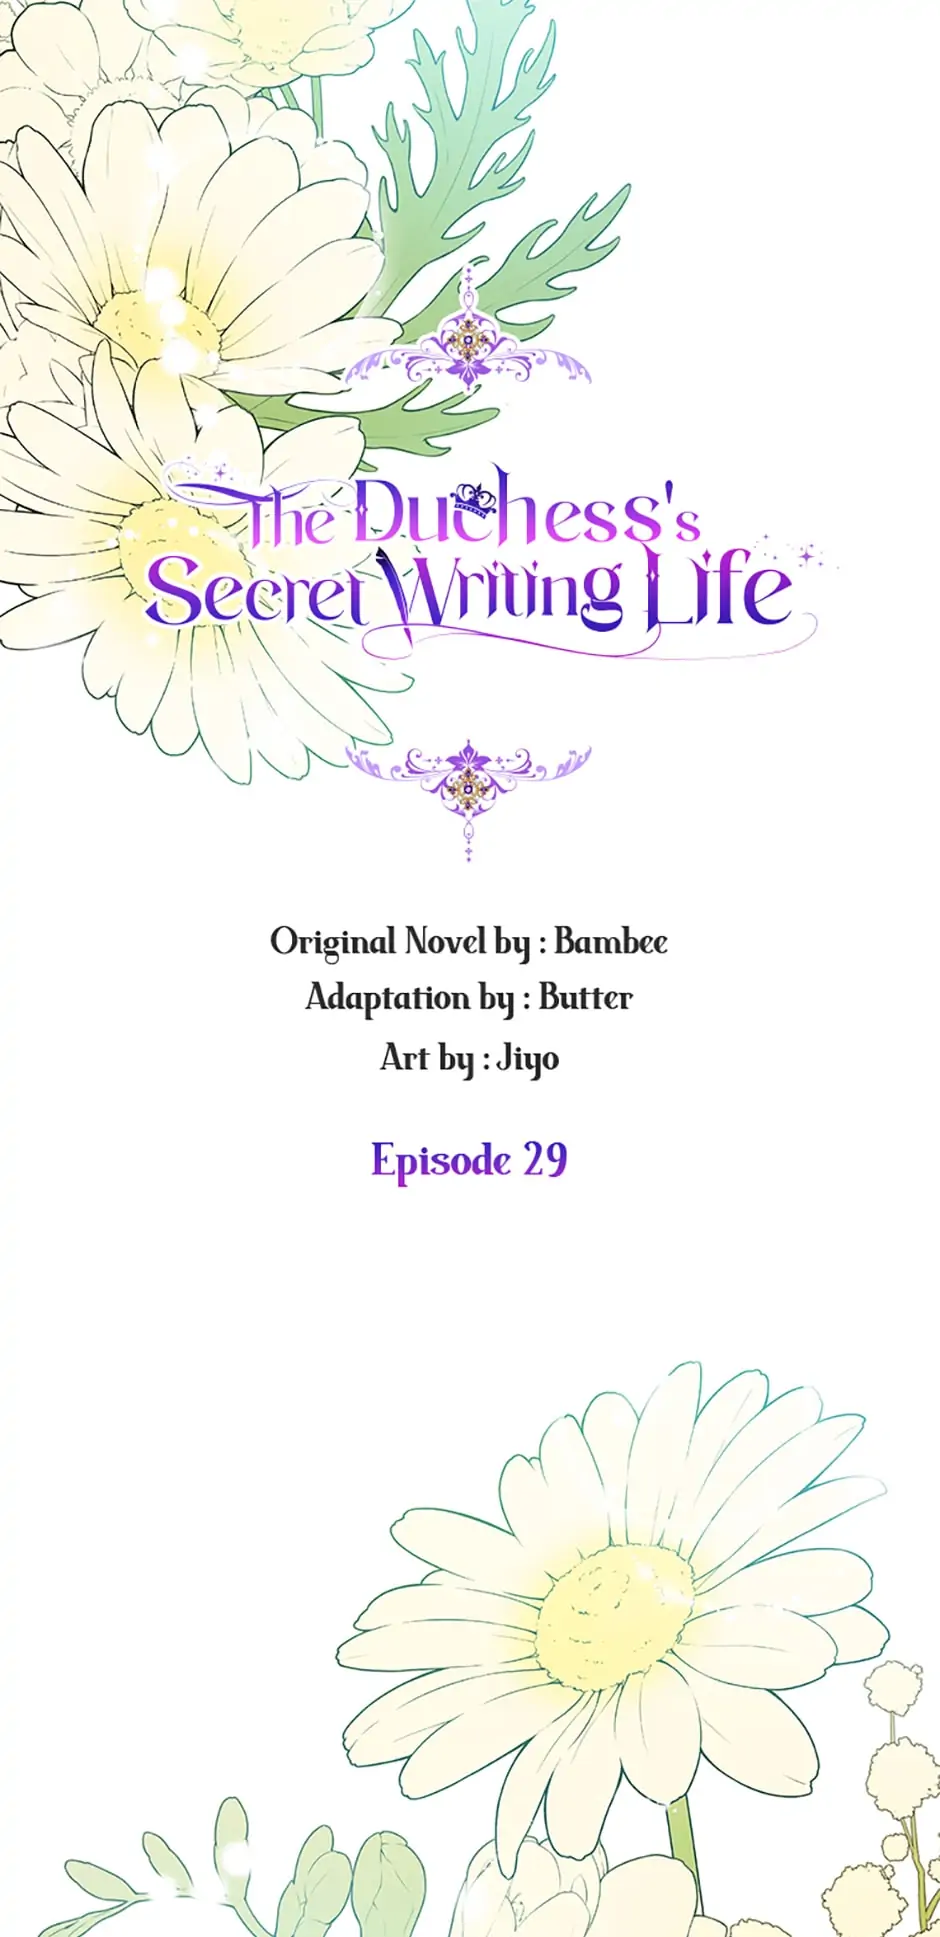 The Duchess’ Secret Writings chapter 29